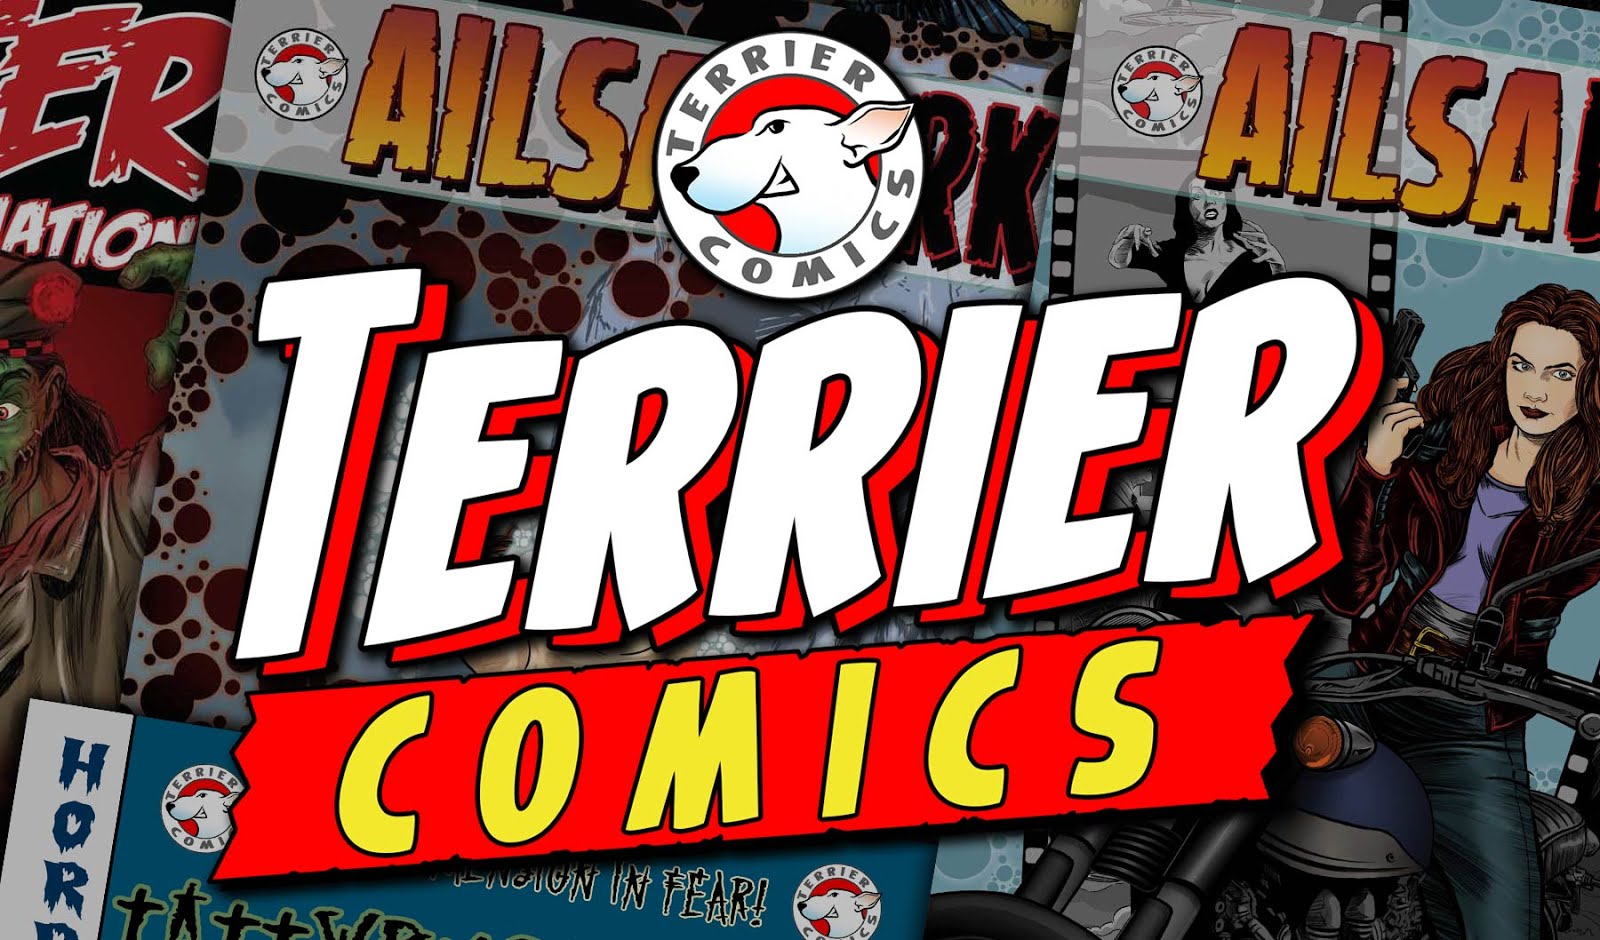 Terrier Comics - Comics with Bite!